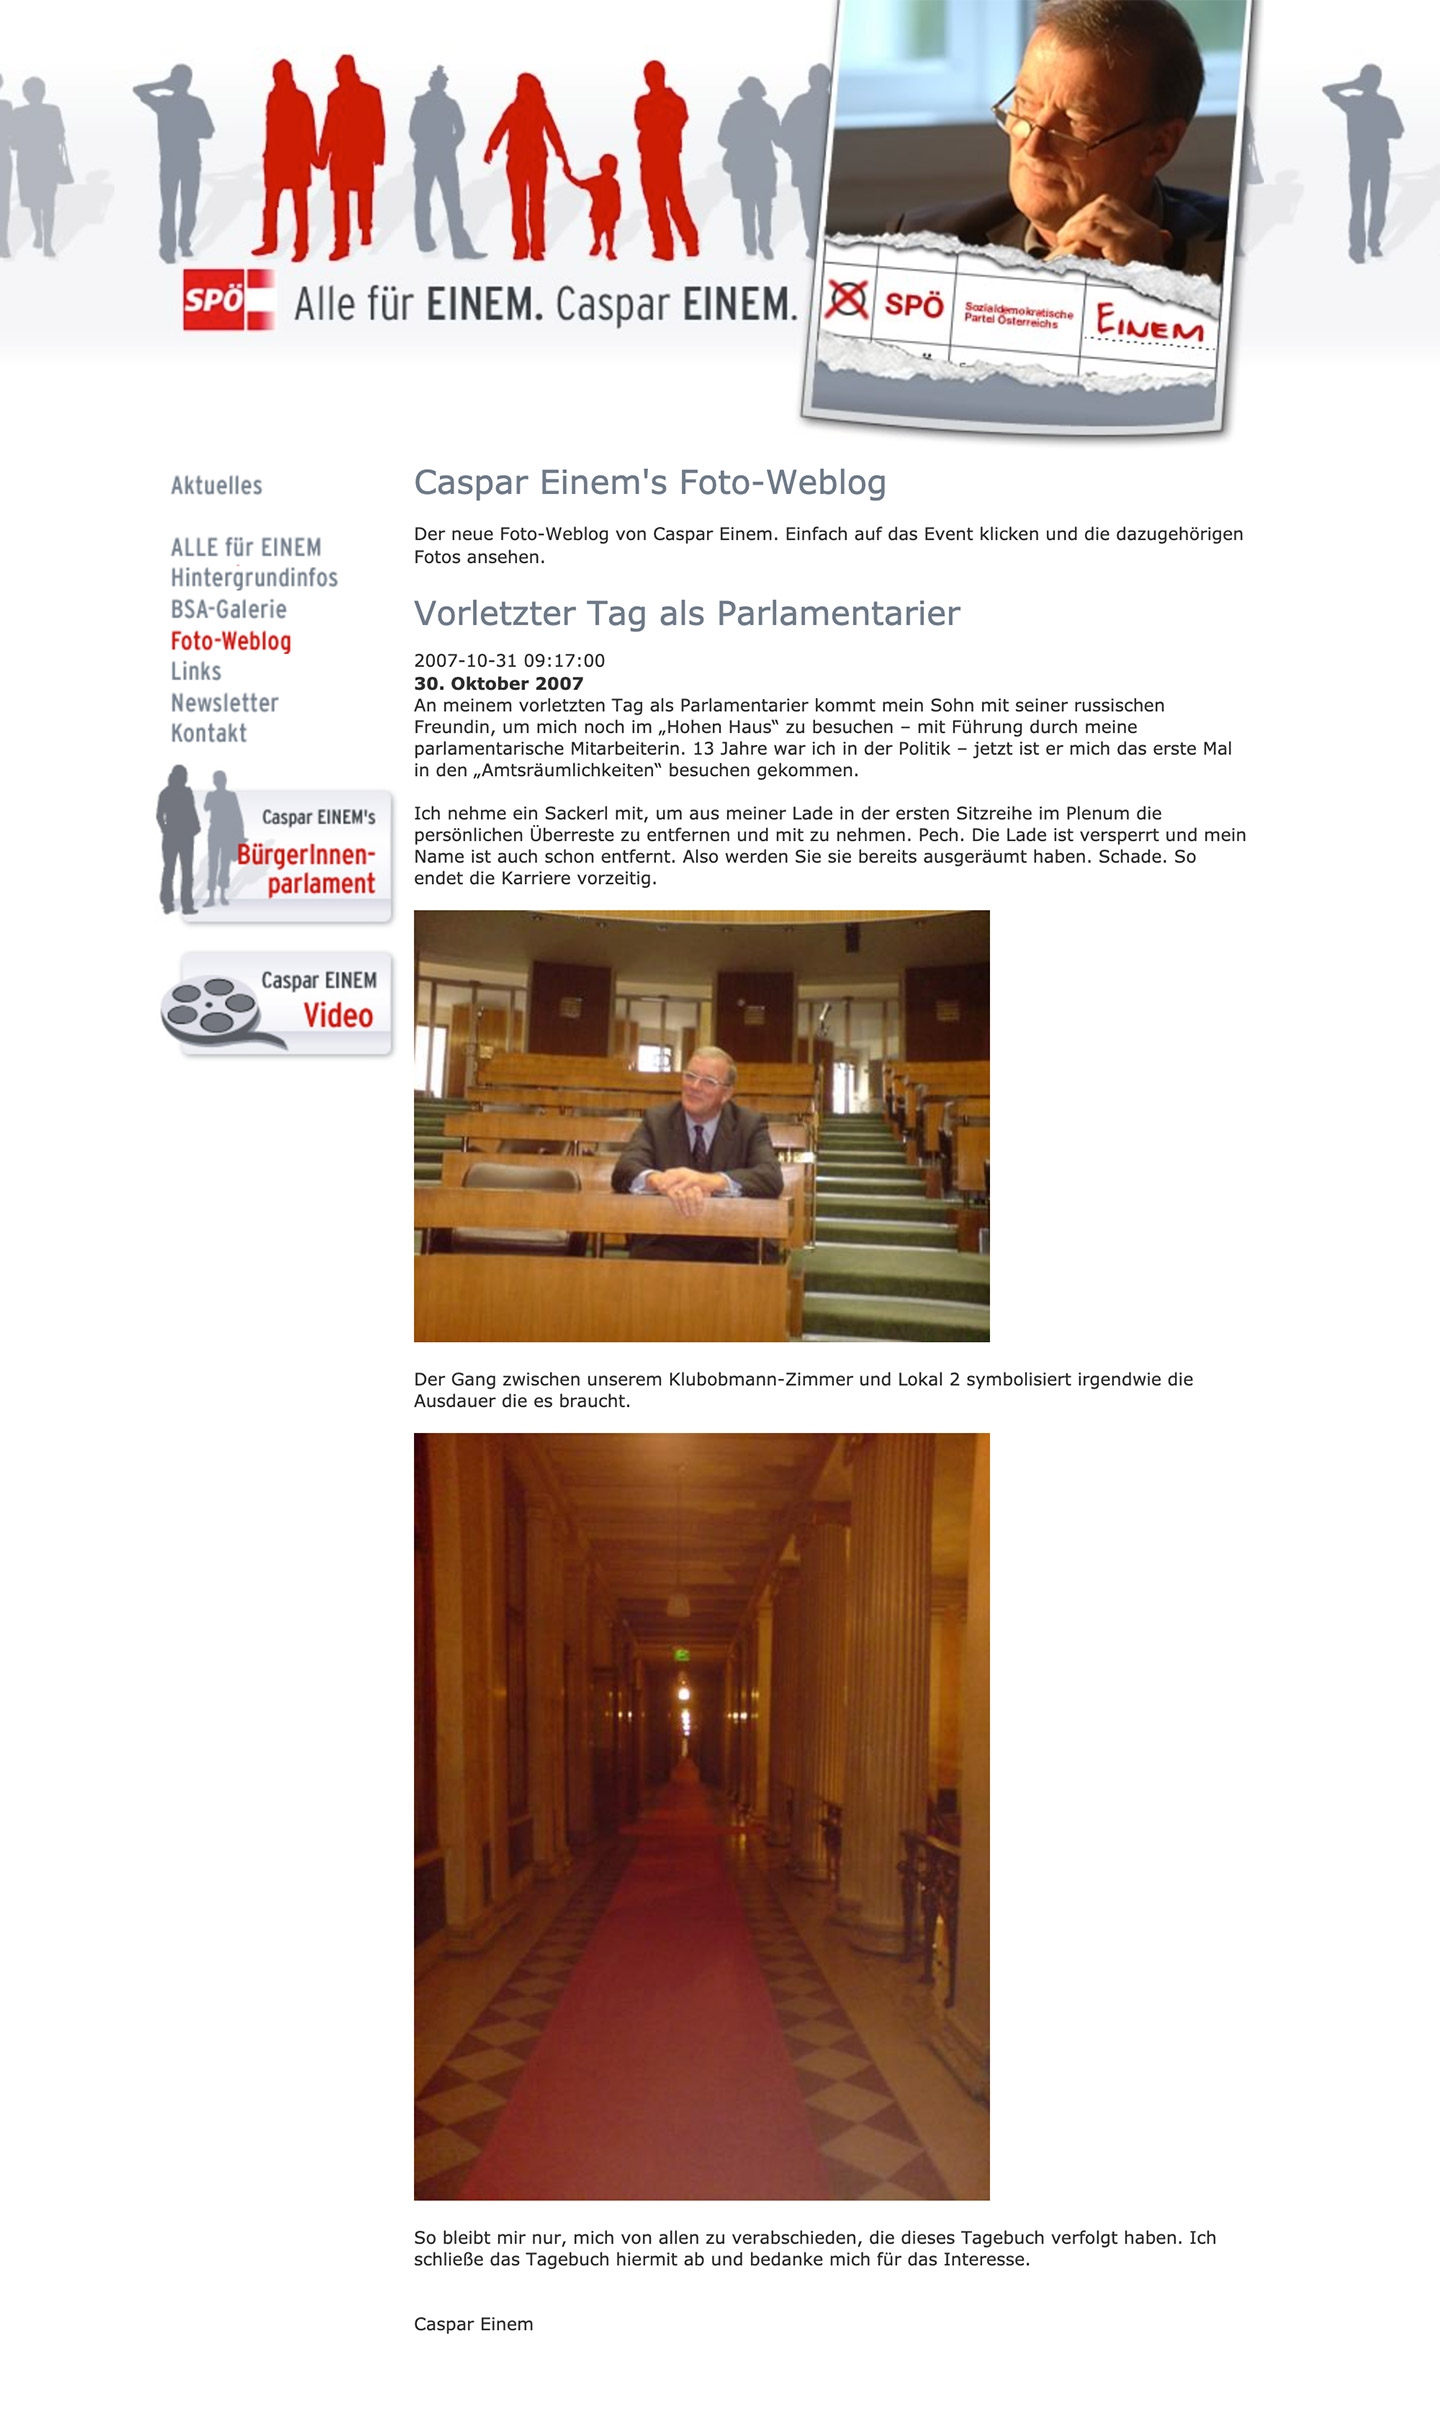 Caspar Einem SPÖ | einem.at | 2006 (Full Screen Scroll) © echonet communication